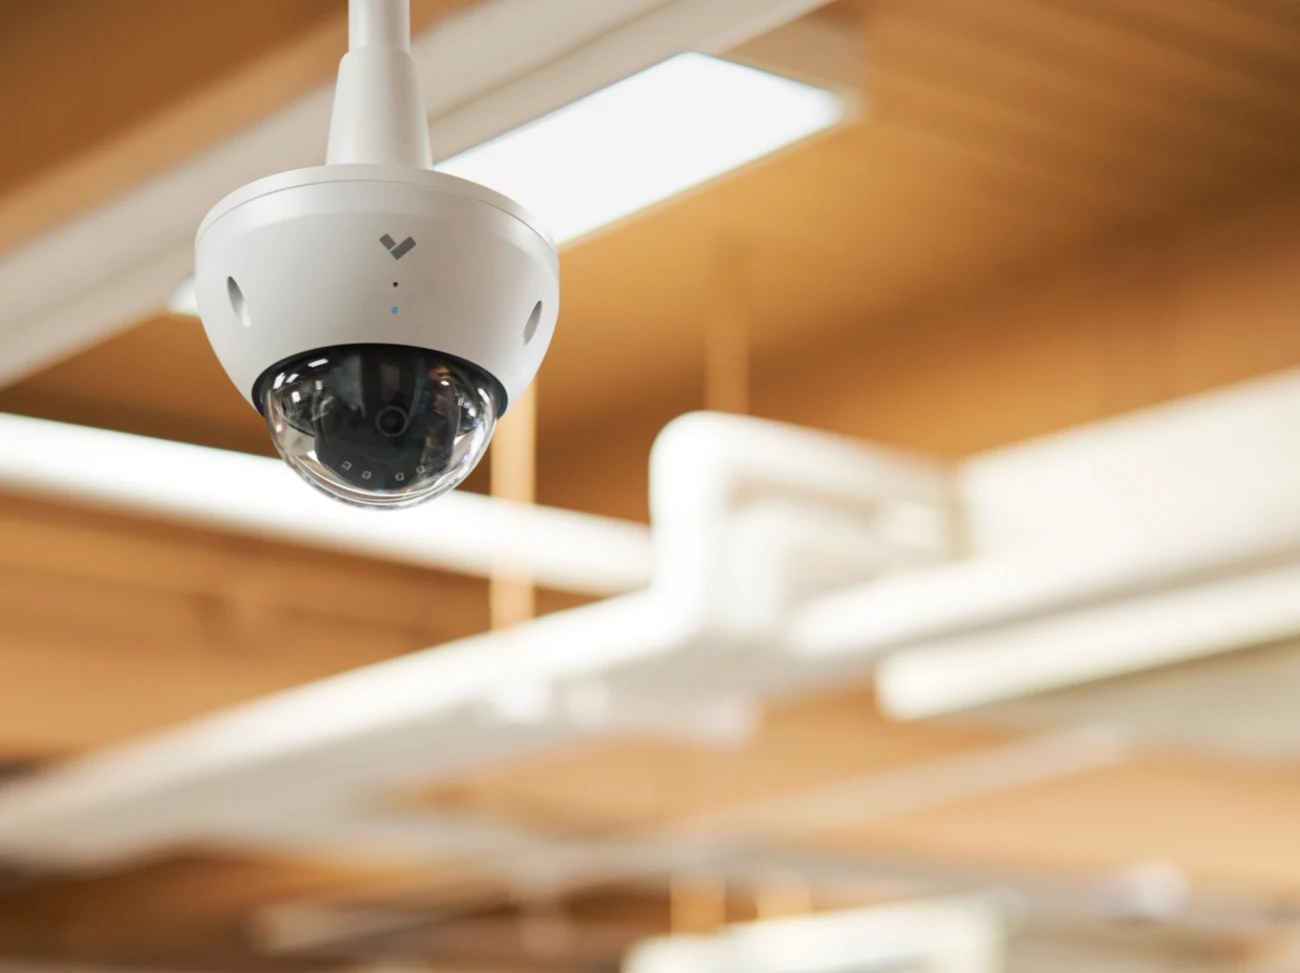 Overhead Verkada Dome Camera - vital when building security systems